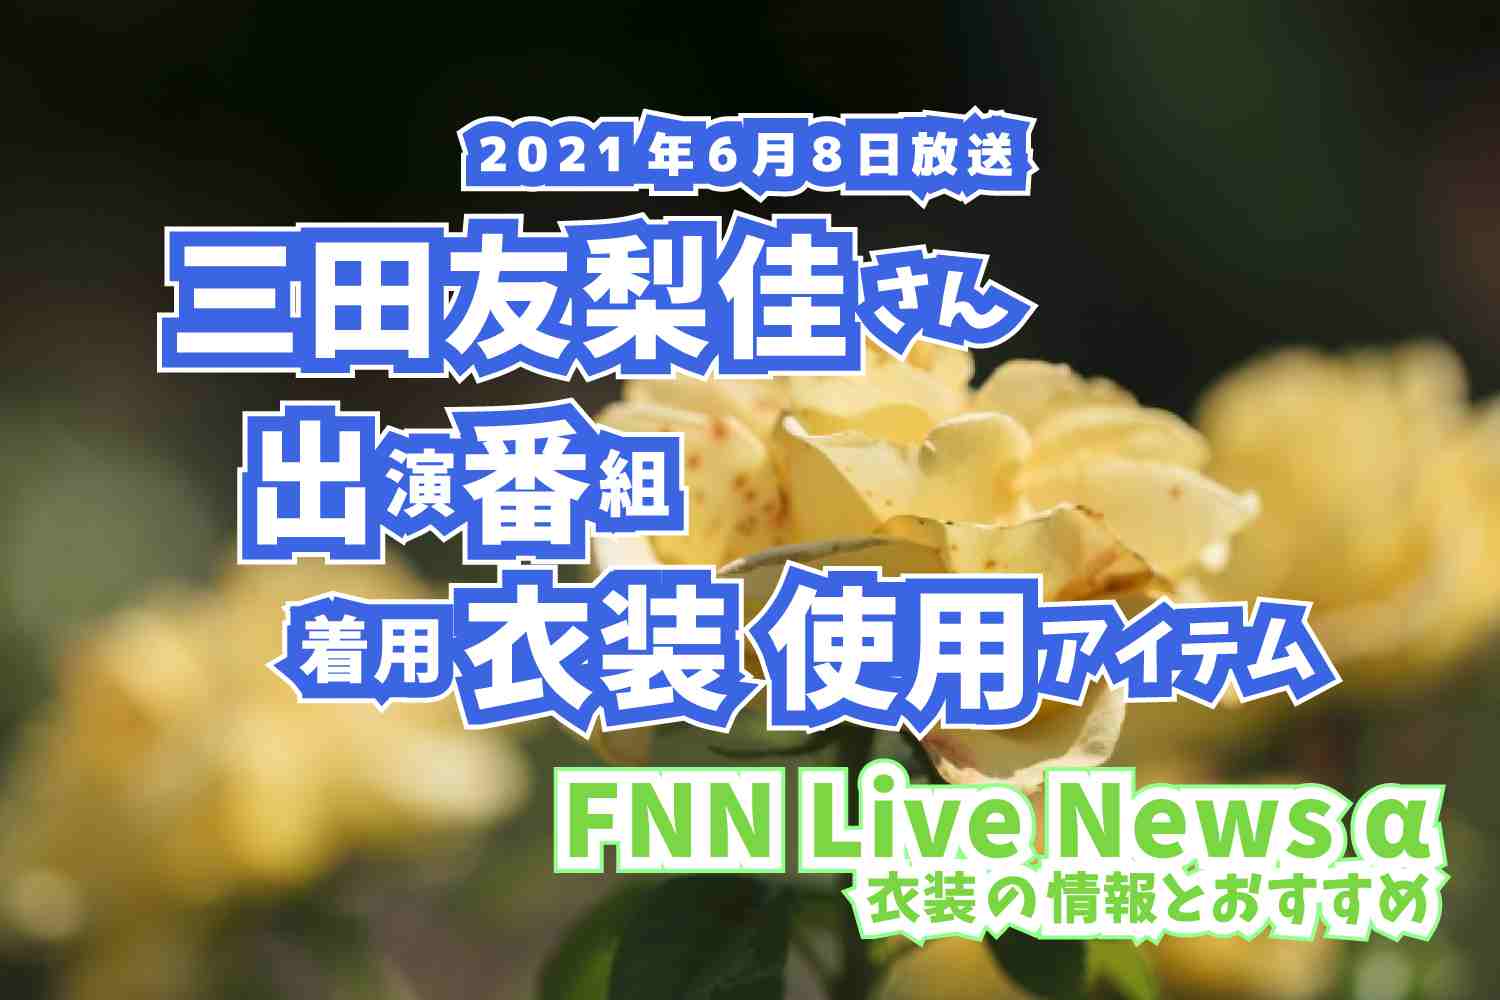 FNN Live News α　三田友梨佳さん　衣装　2021年6月8日放送